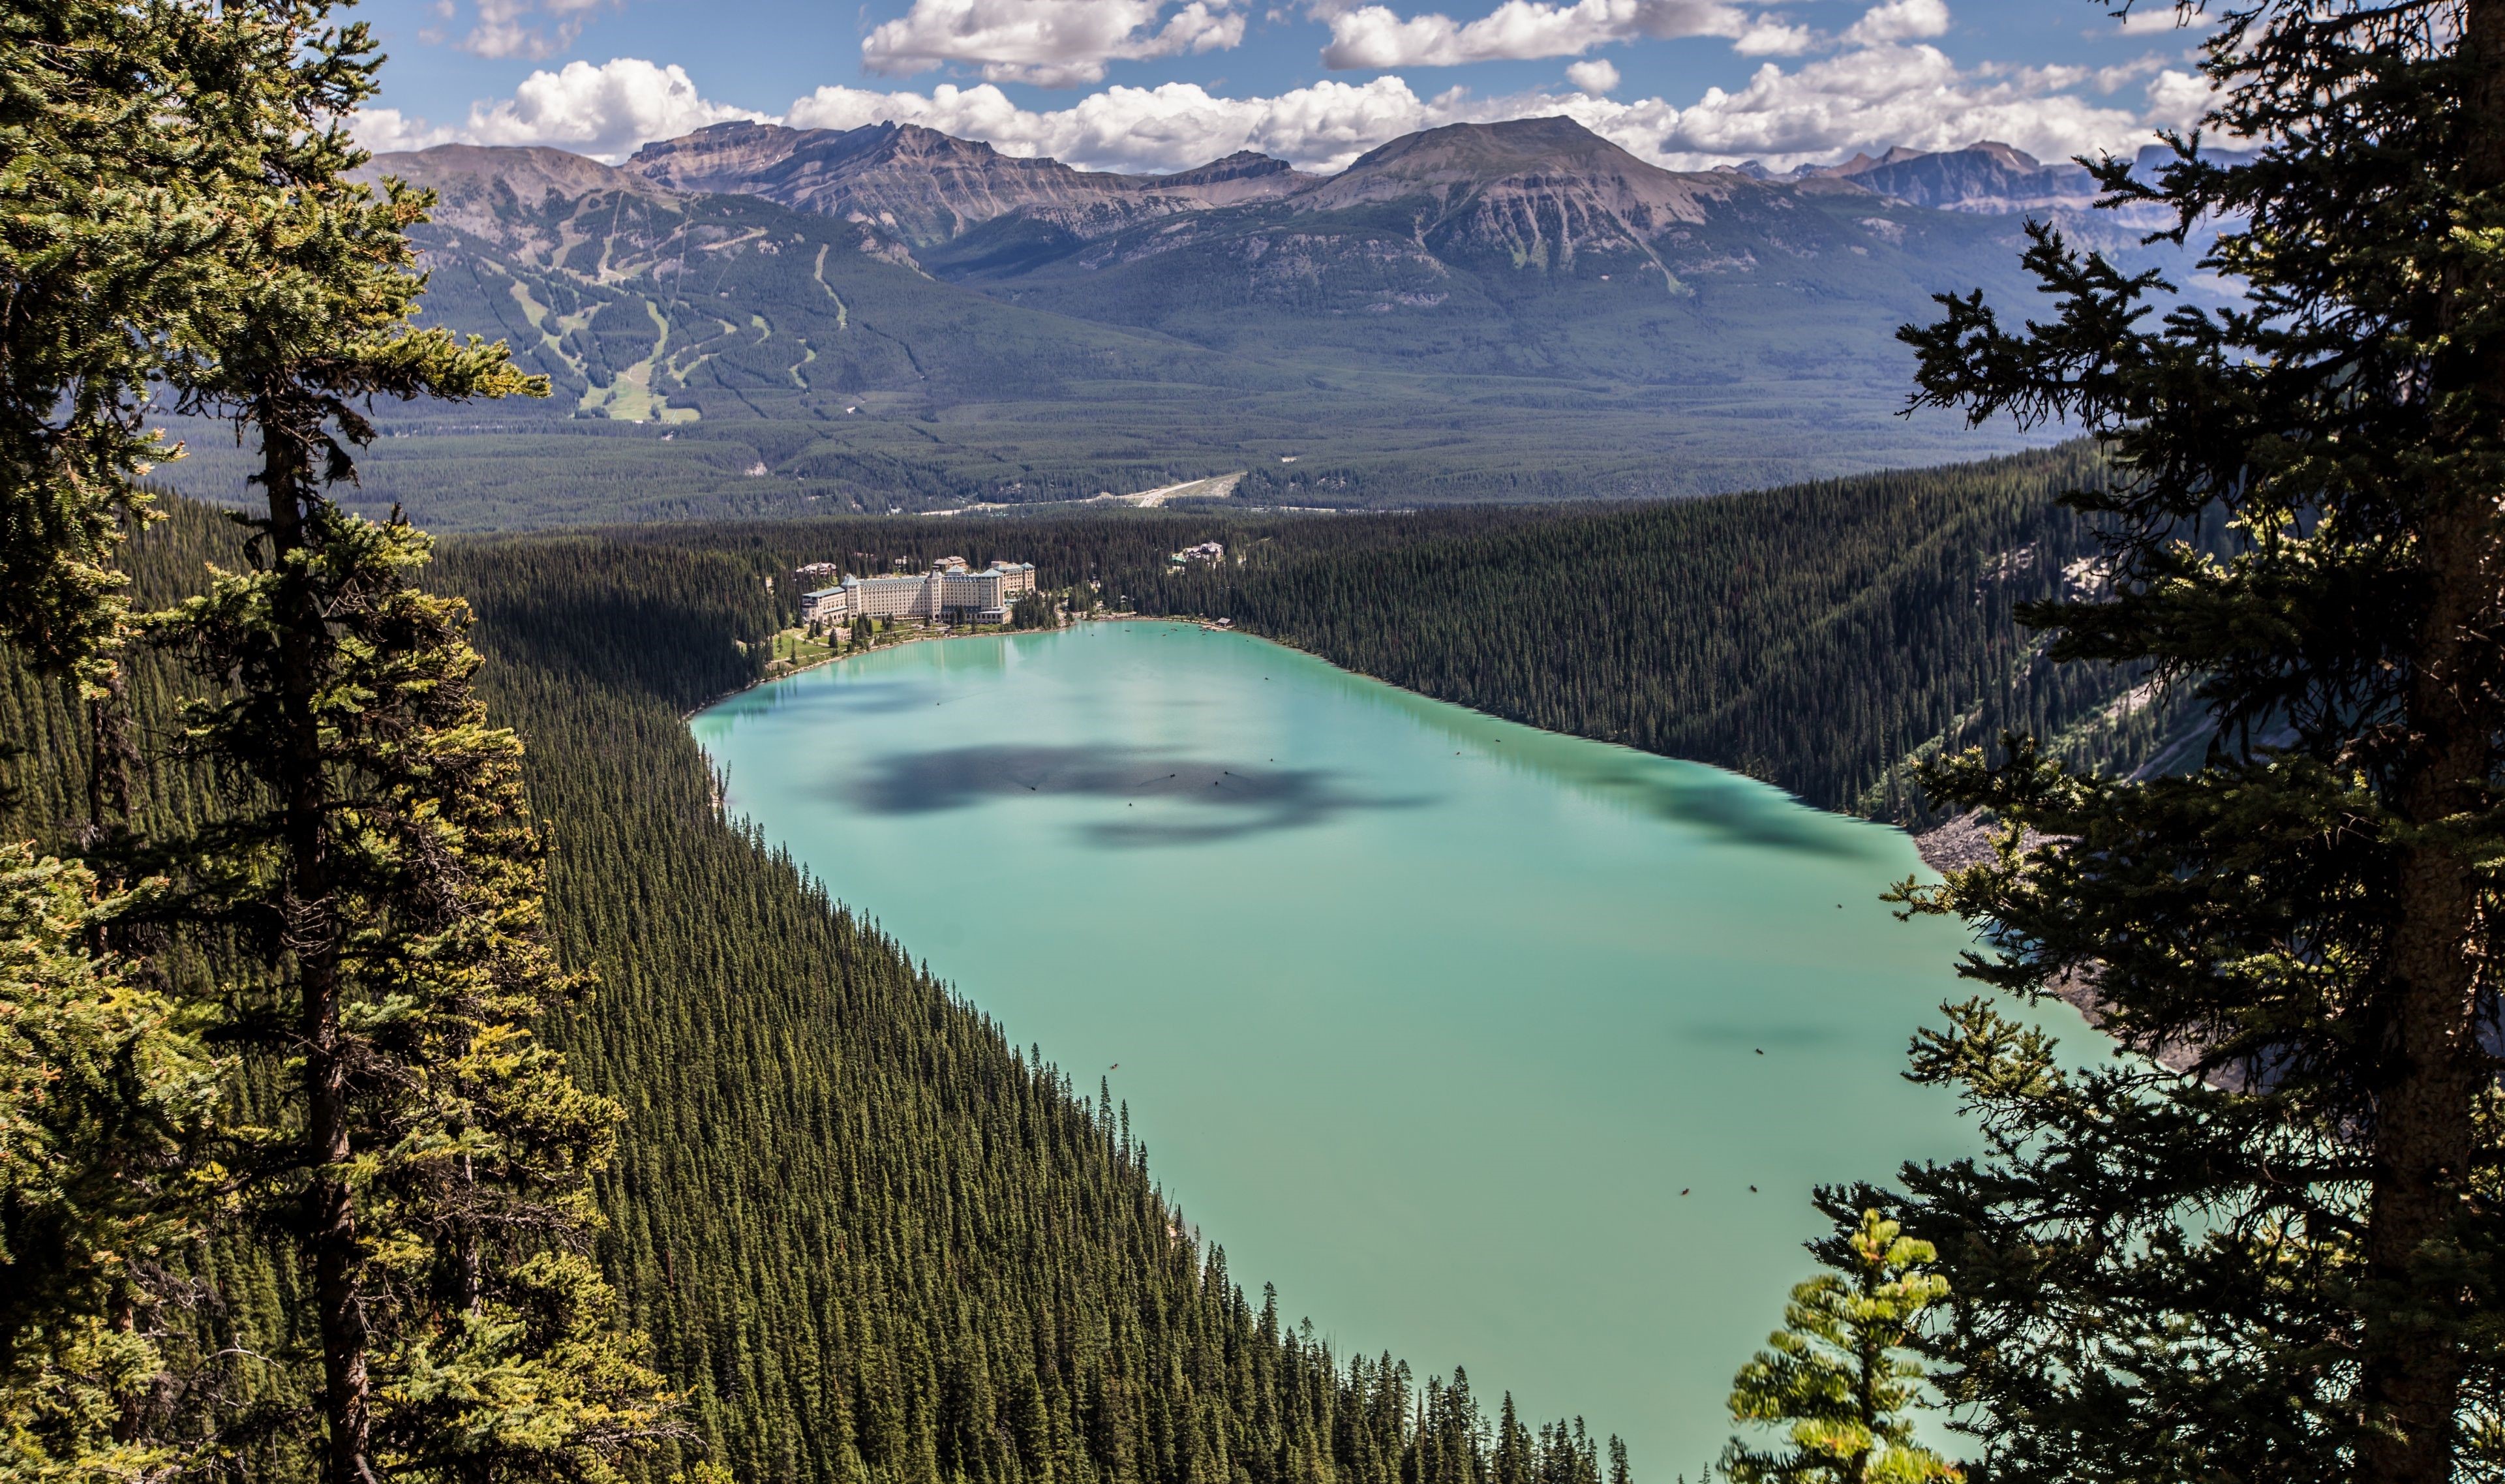 عکس هوایی از دریاچه ونکوور کانادا